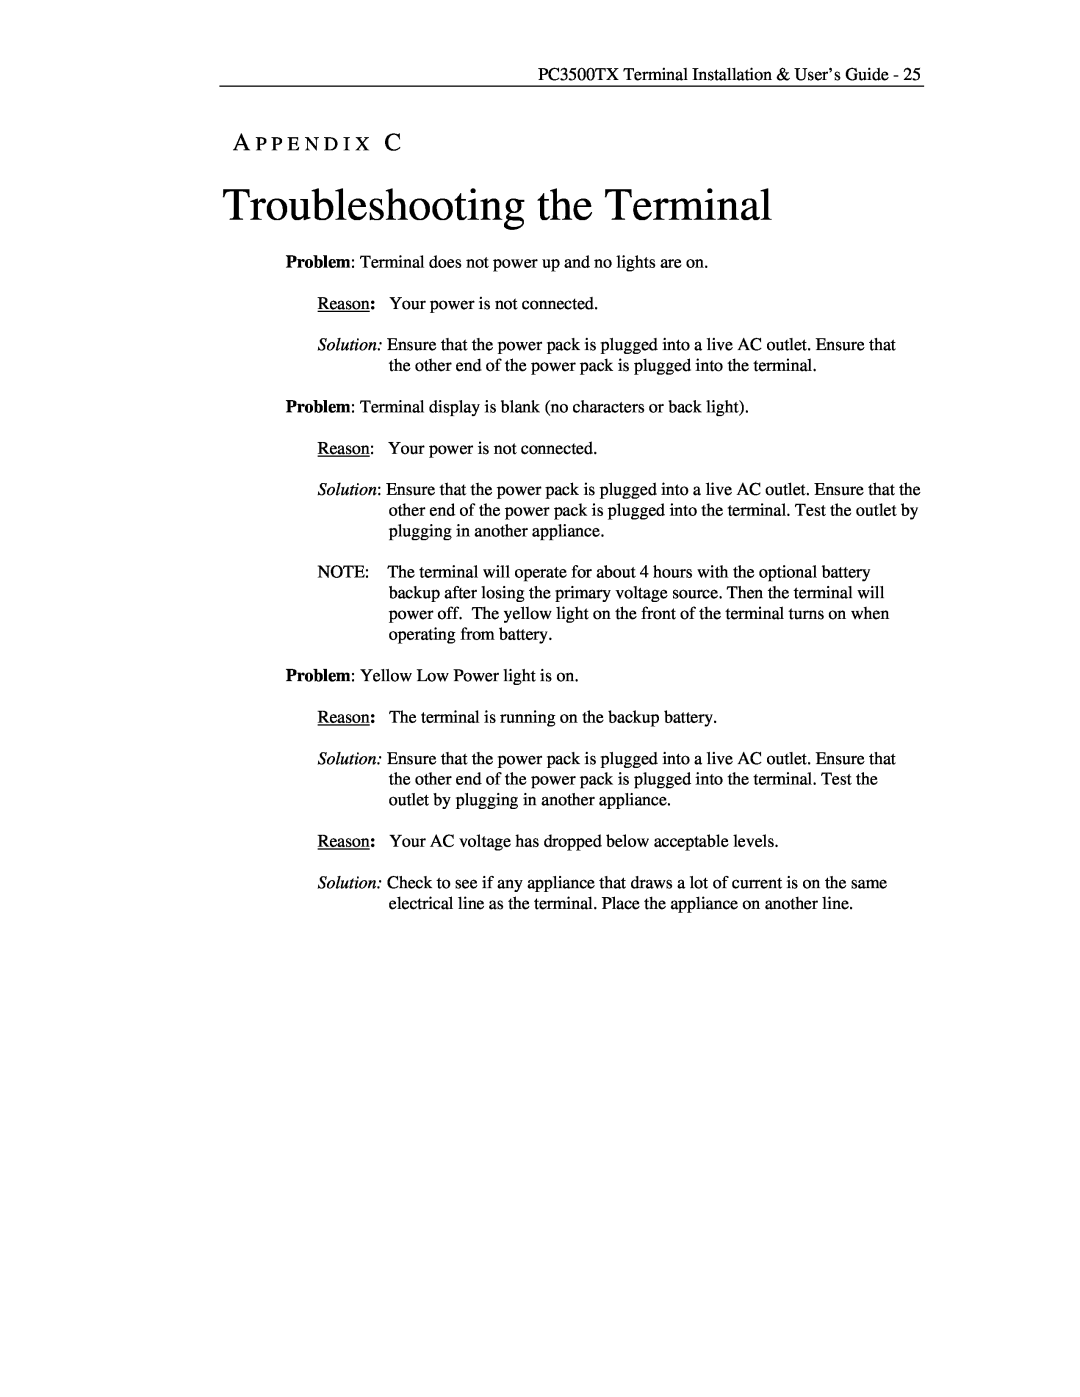 Lathem PC3500TX manual Troubleshooting the Terminal, A P P E N D I X C 